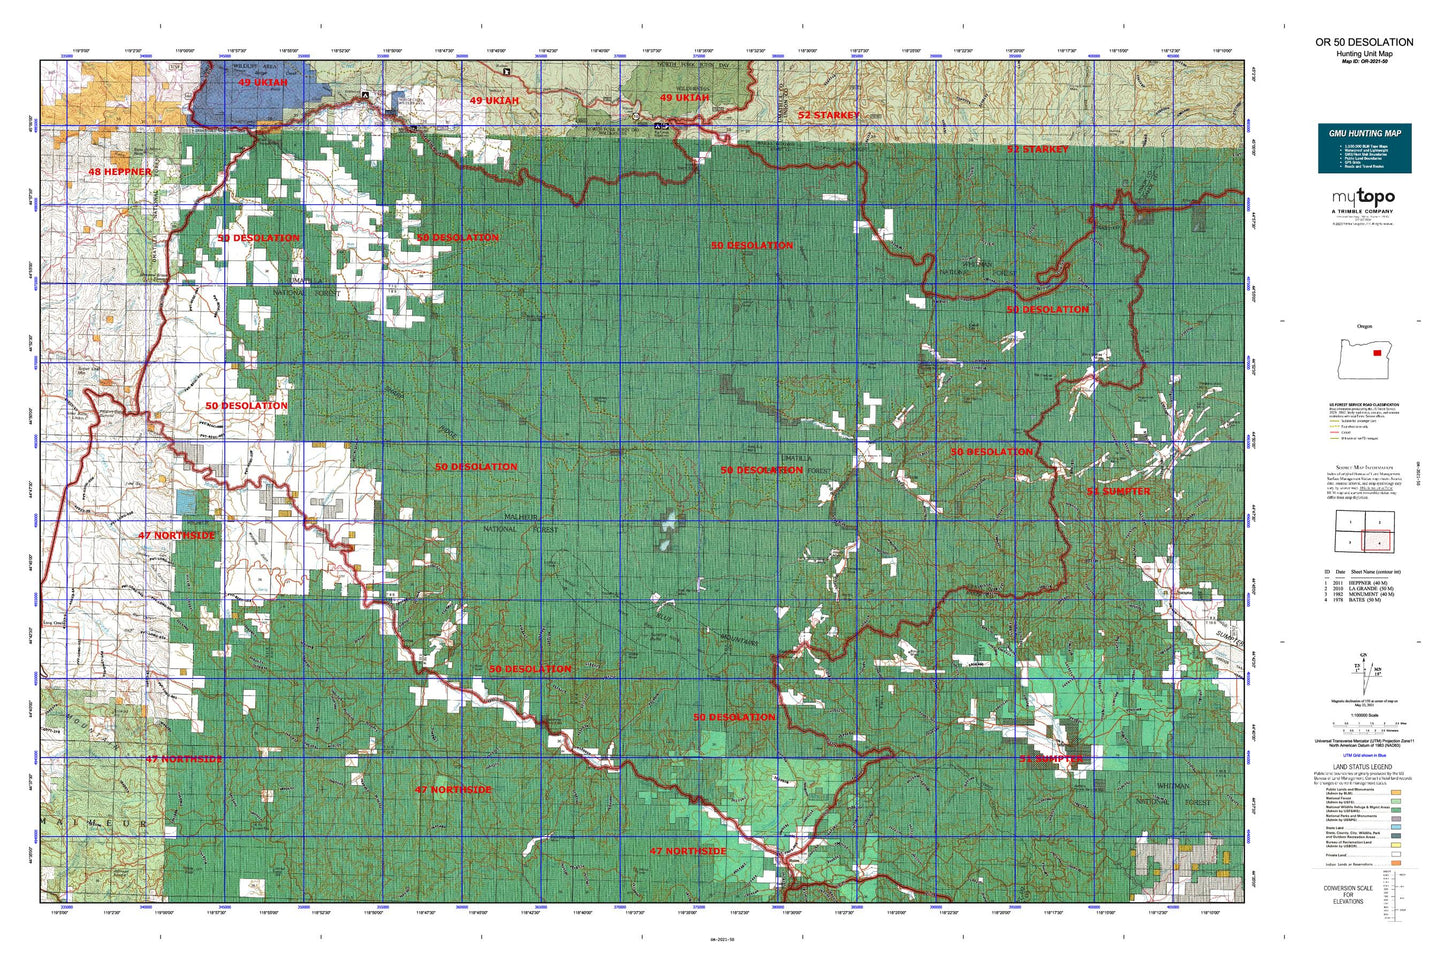 Oregon 50 Desolation Map Image